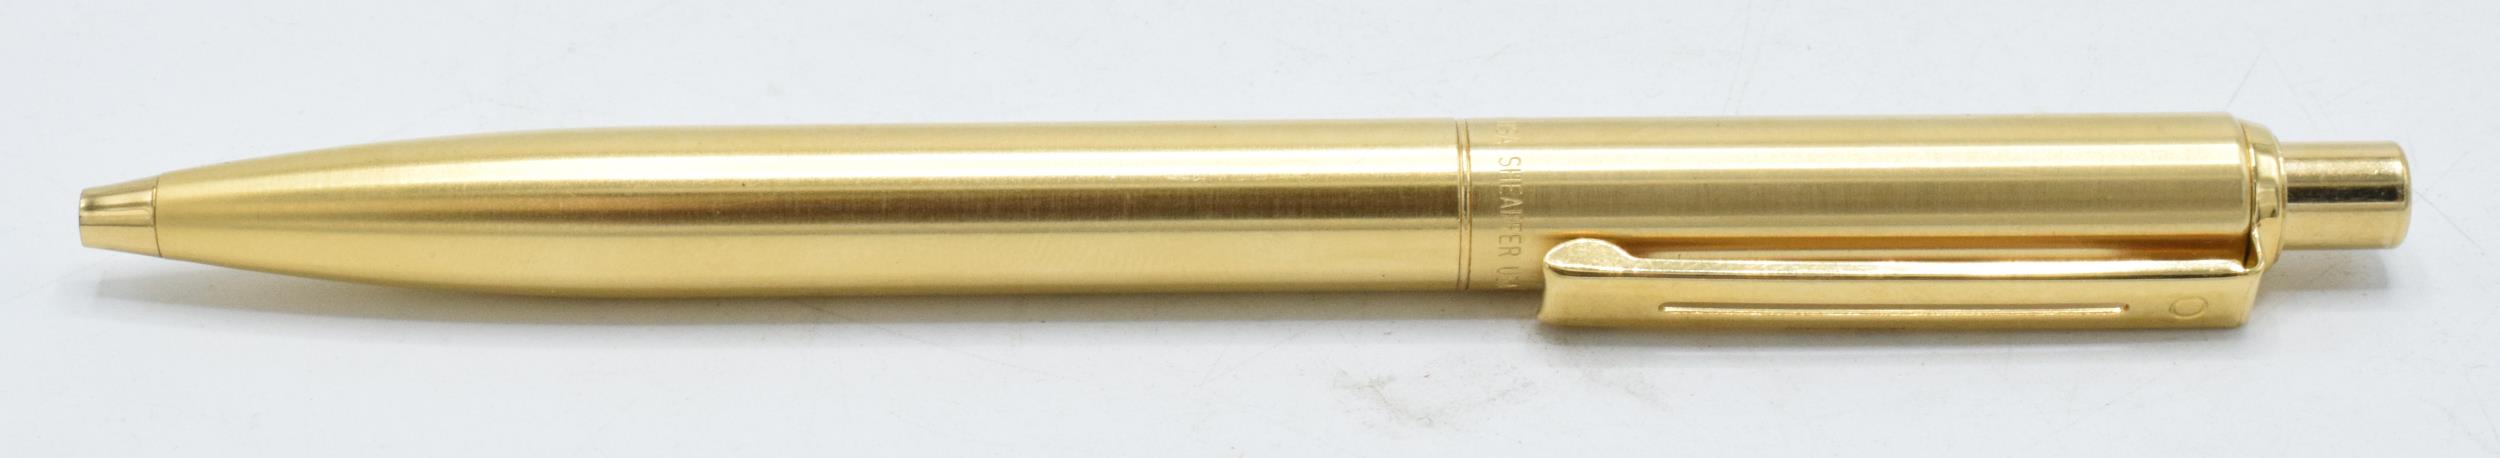 Sheaffer gold plated ball point pen.